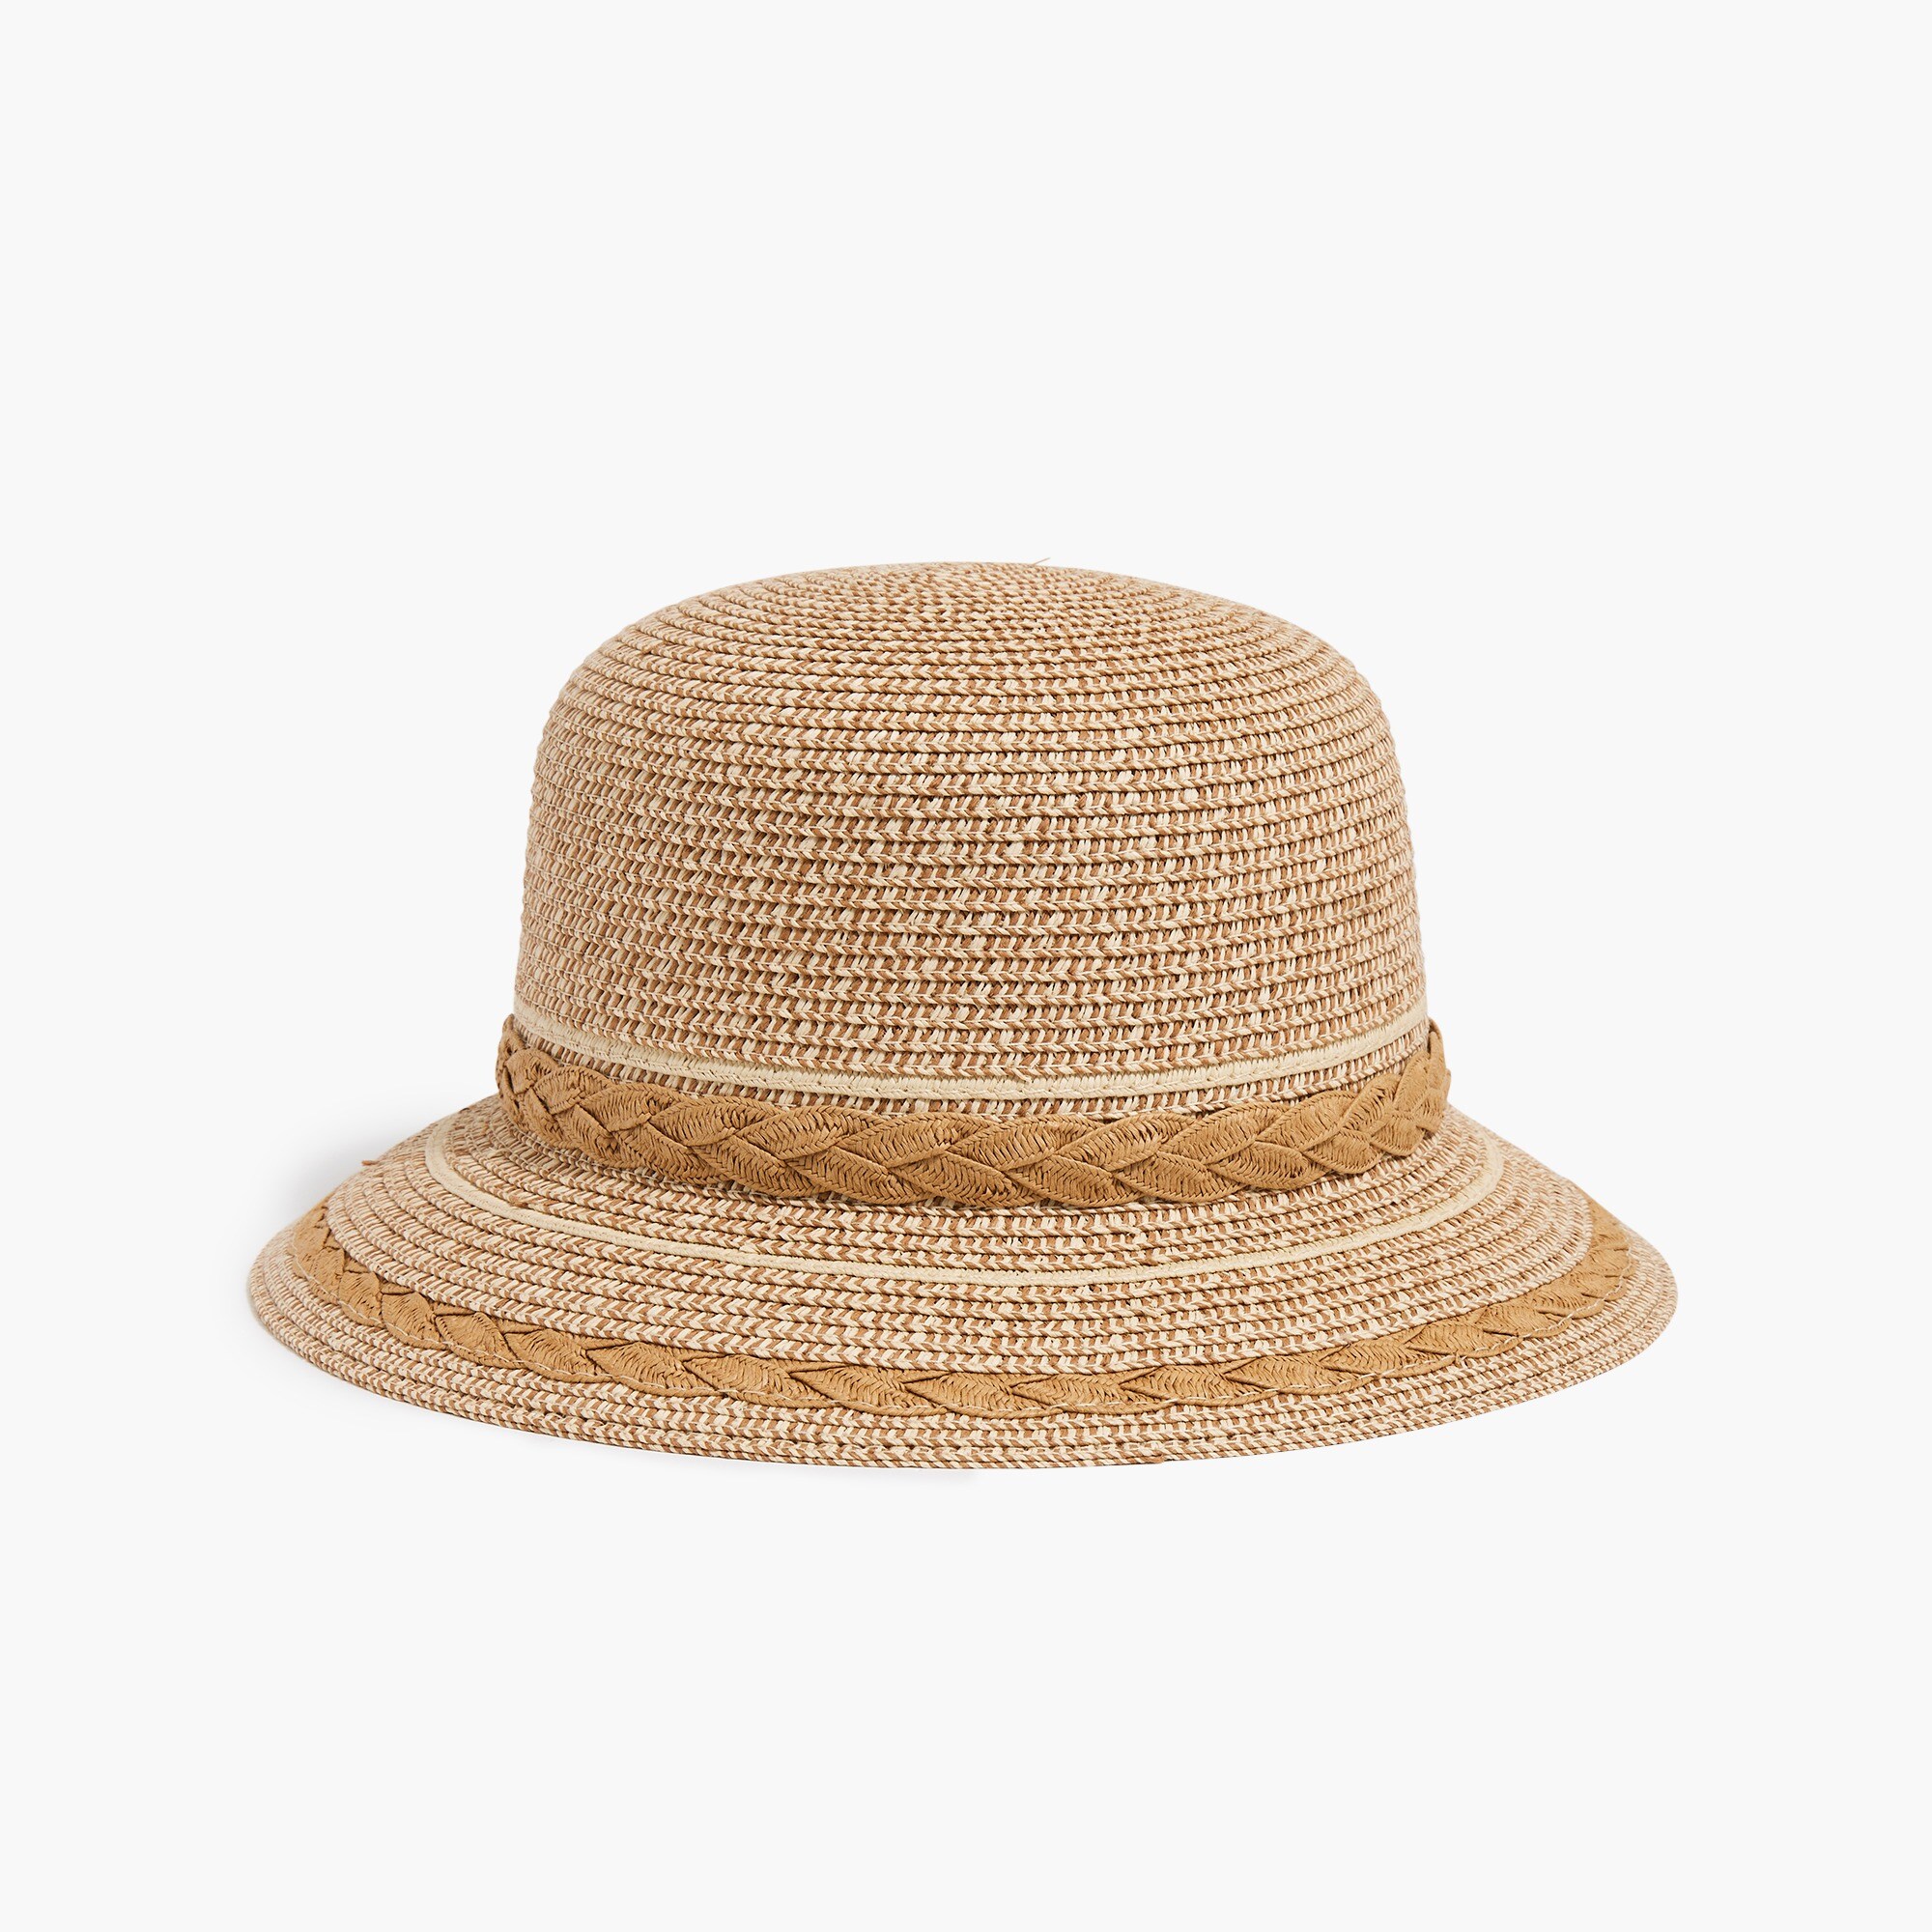  Bucket hat with braided trim